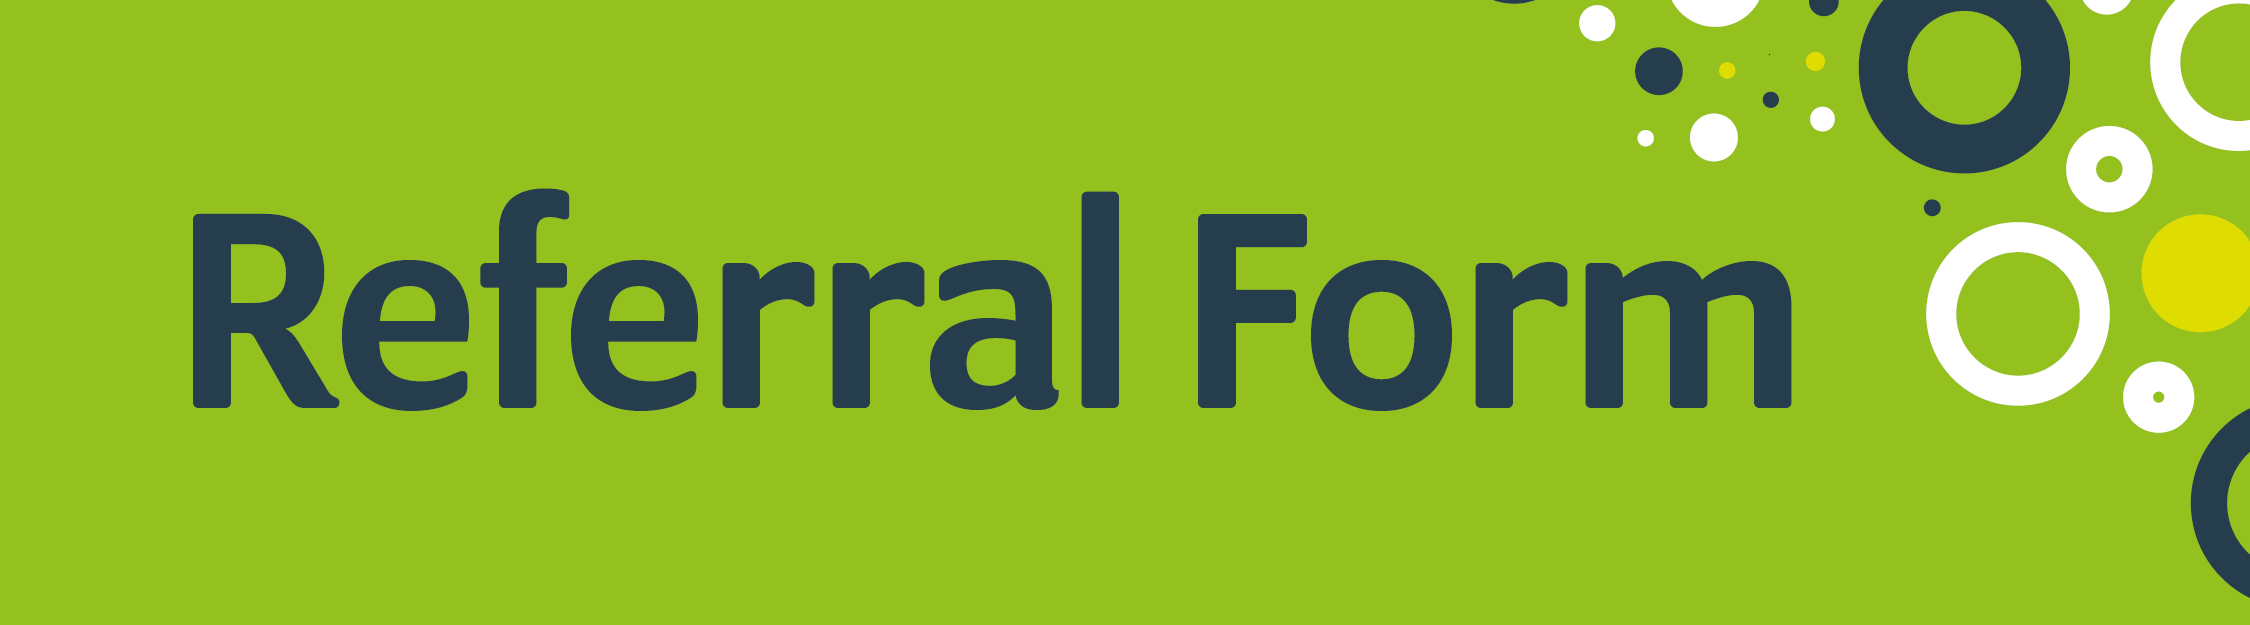 Referral Form button